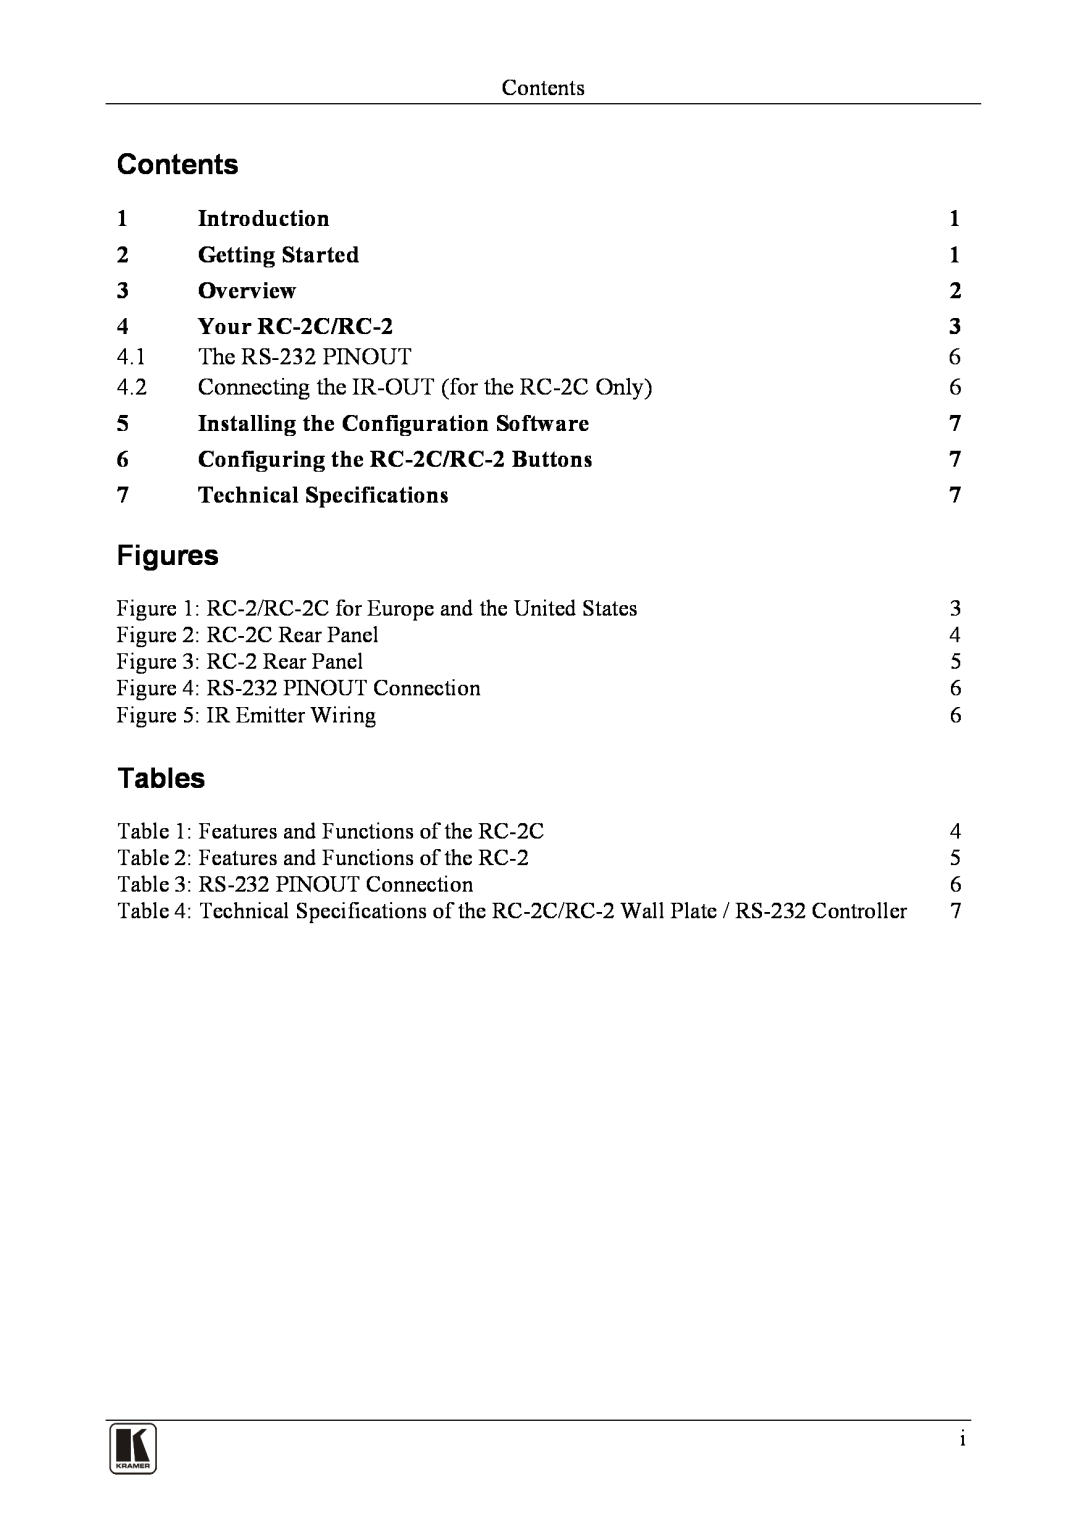 Kramer Electronics RC-2C user manual Contents, Figures, Tables 